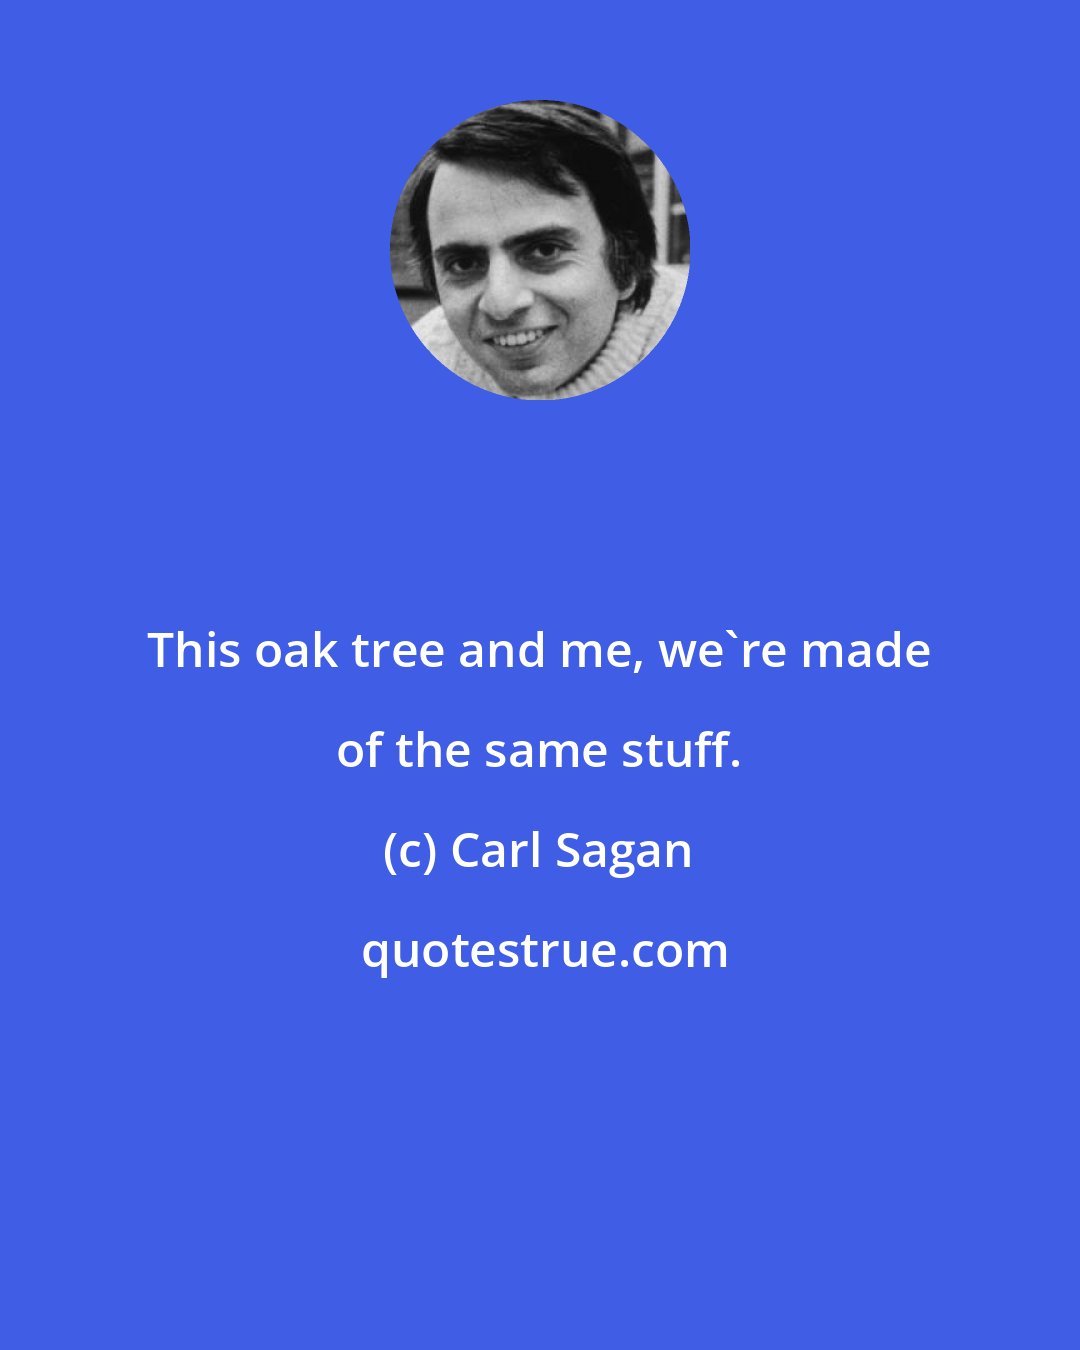 Carl Sagan: This oak tree and me, we're made of the same stuff.